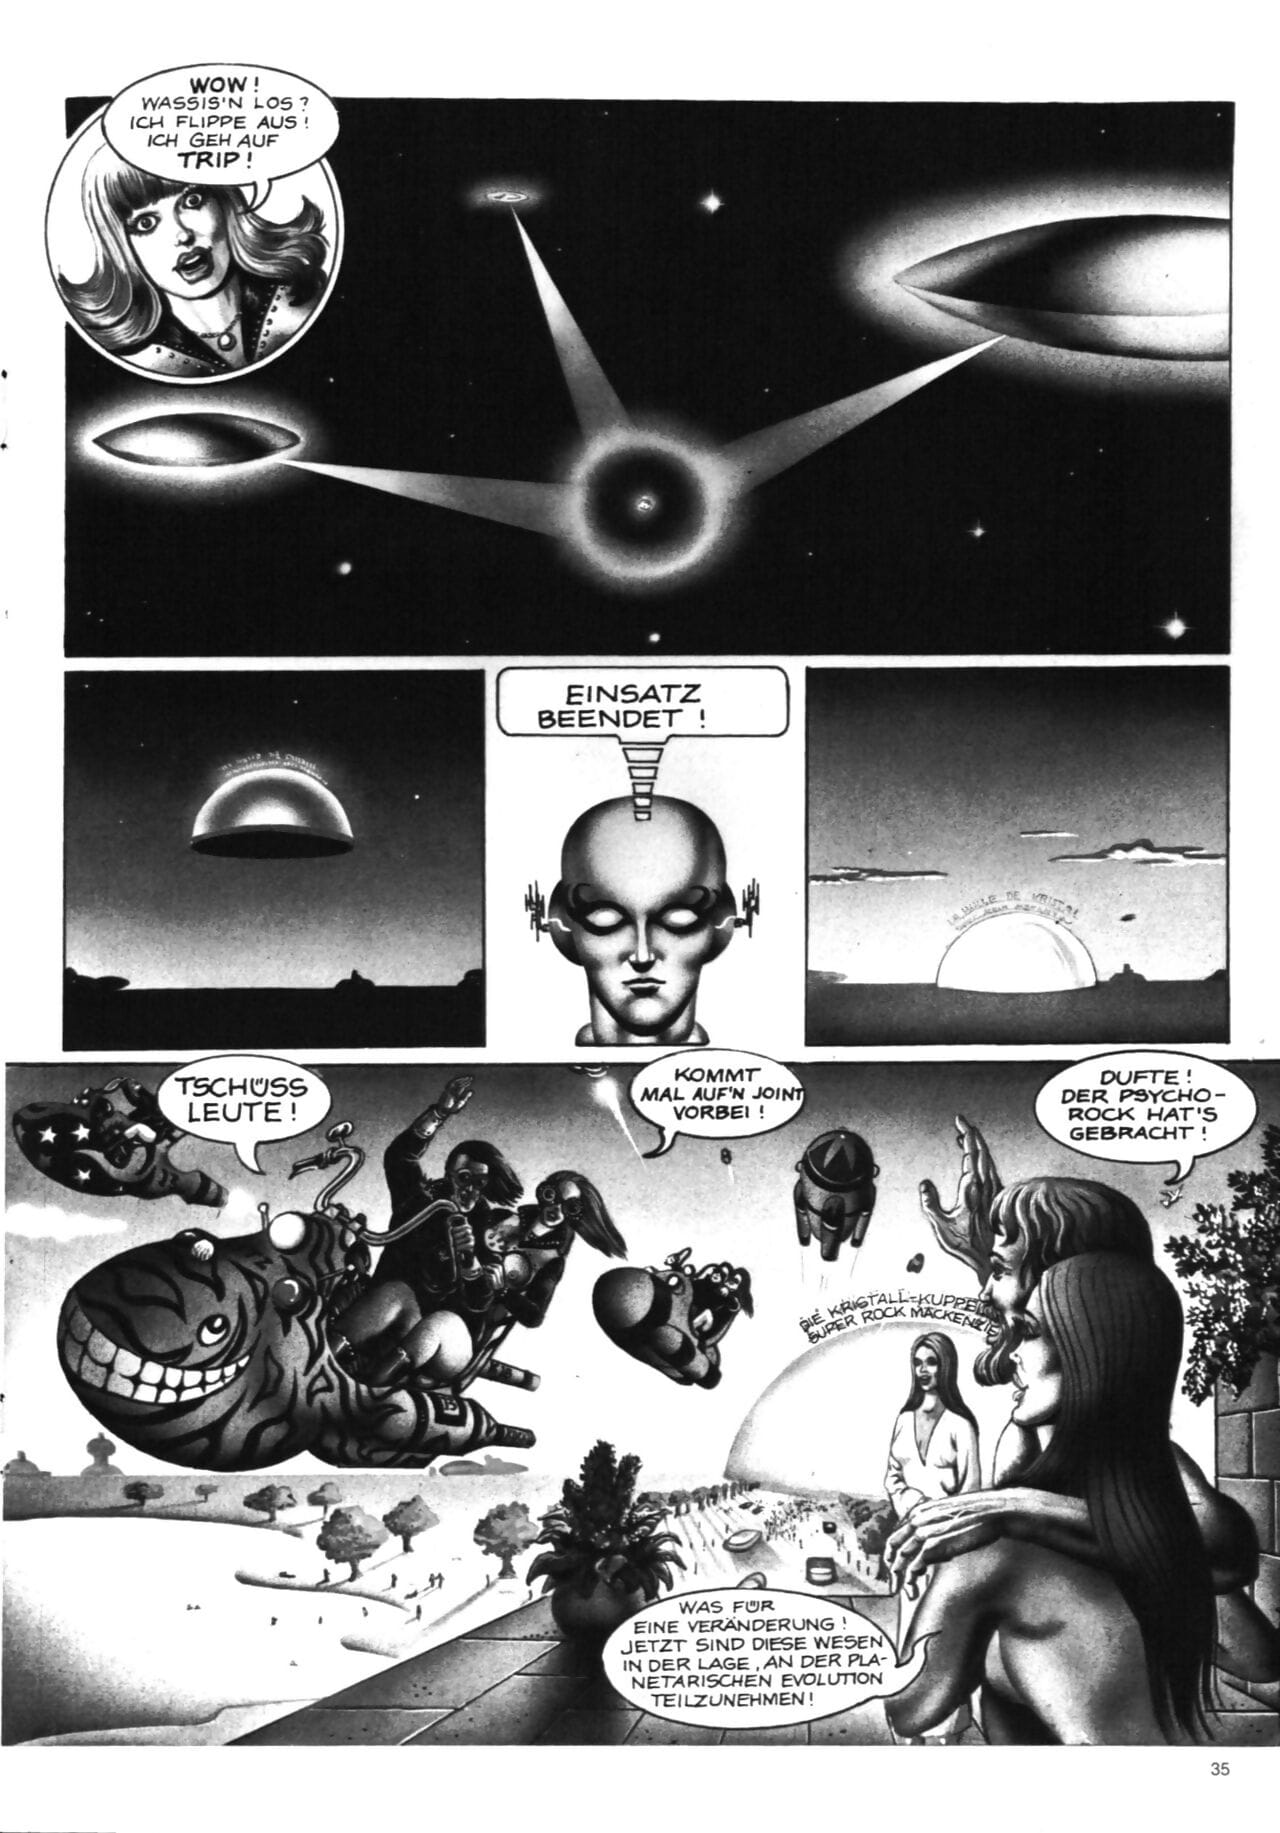 Schwermetall #010 - part 2 page 1